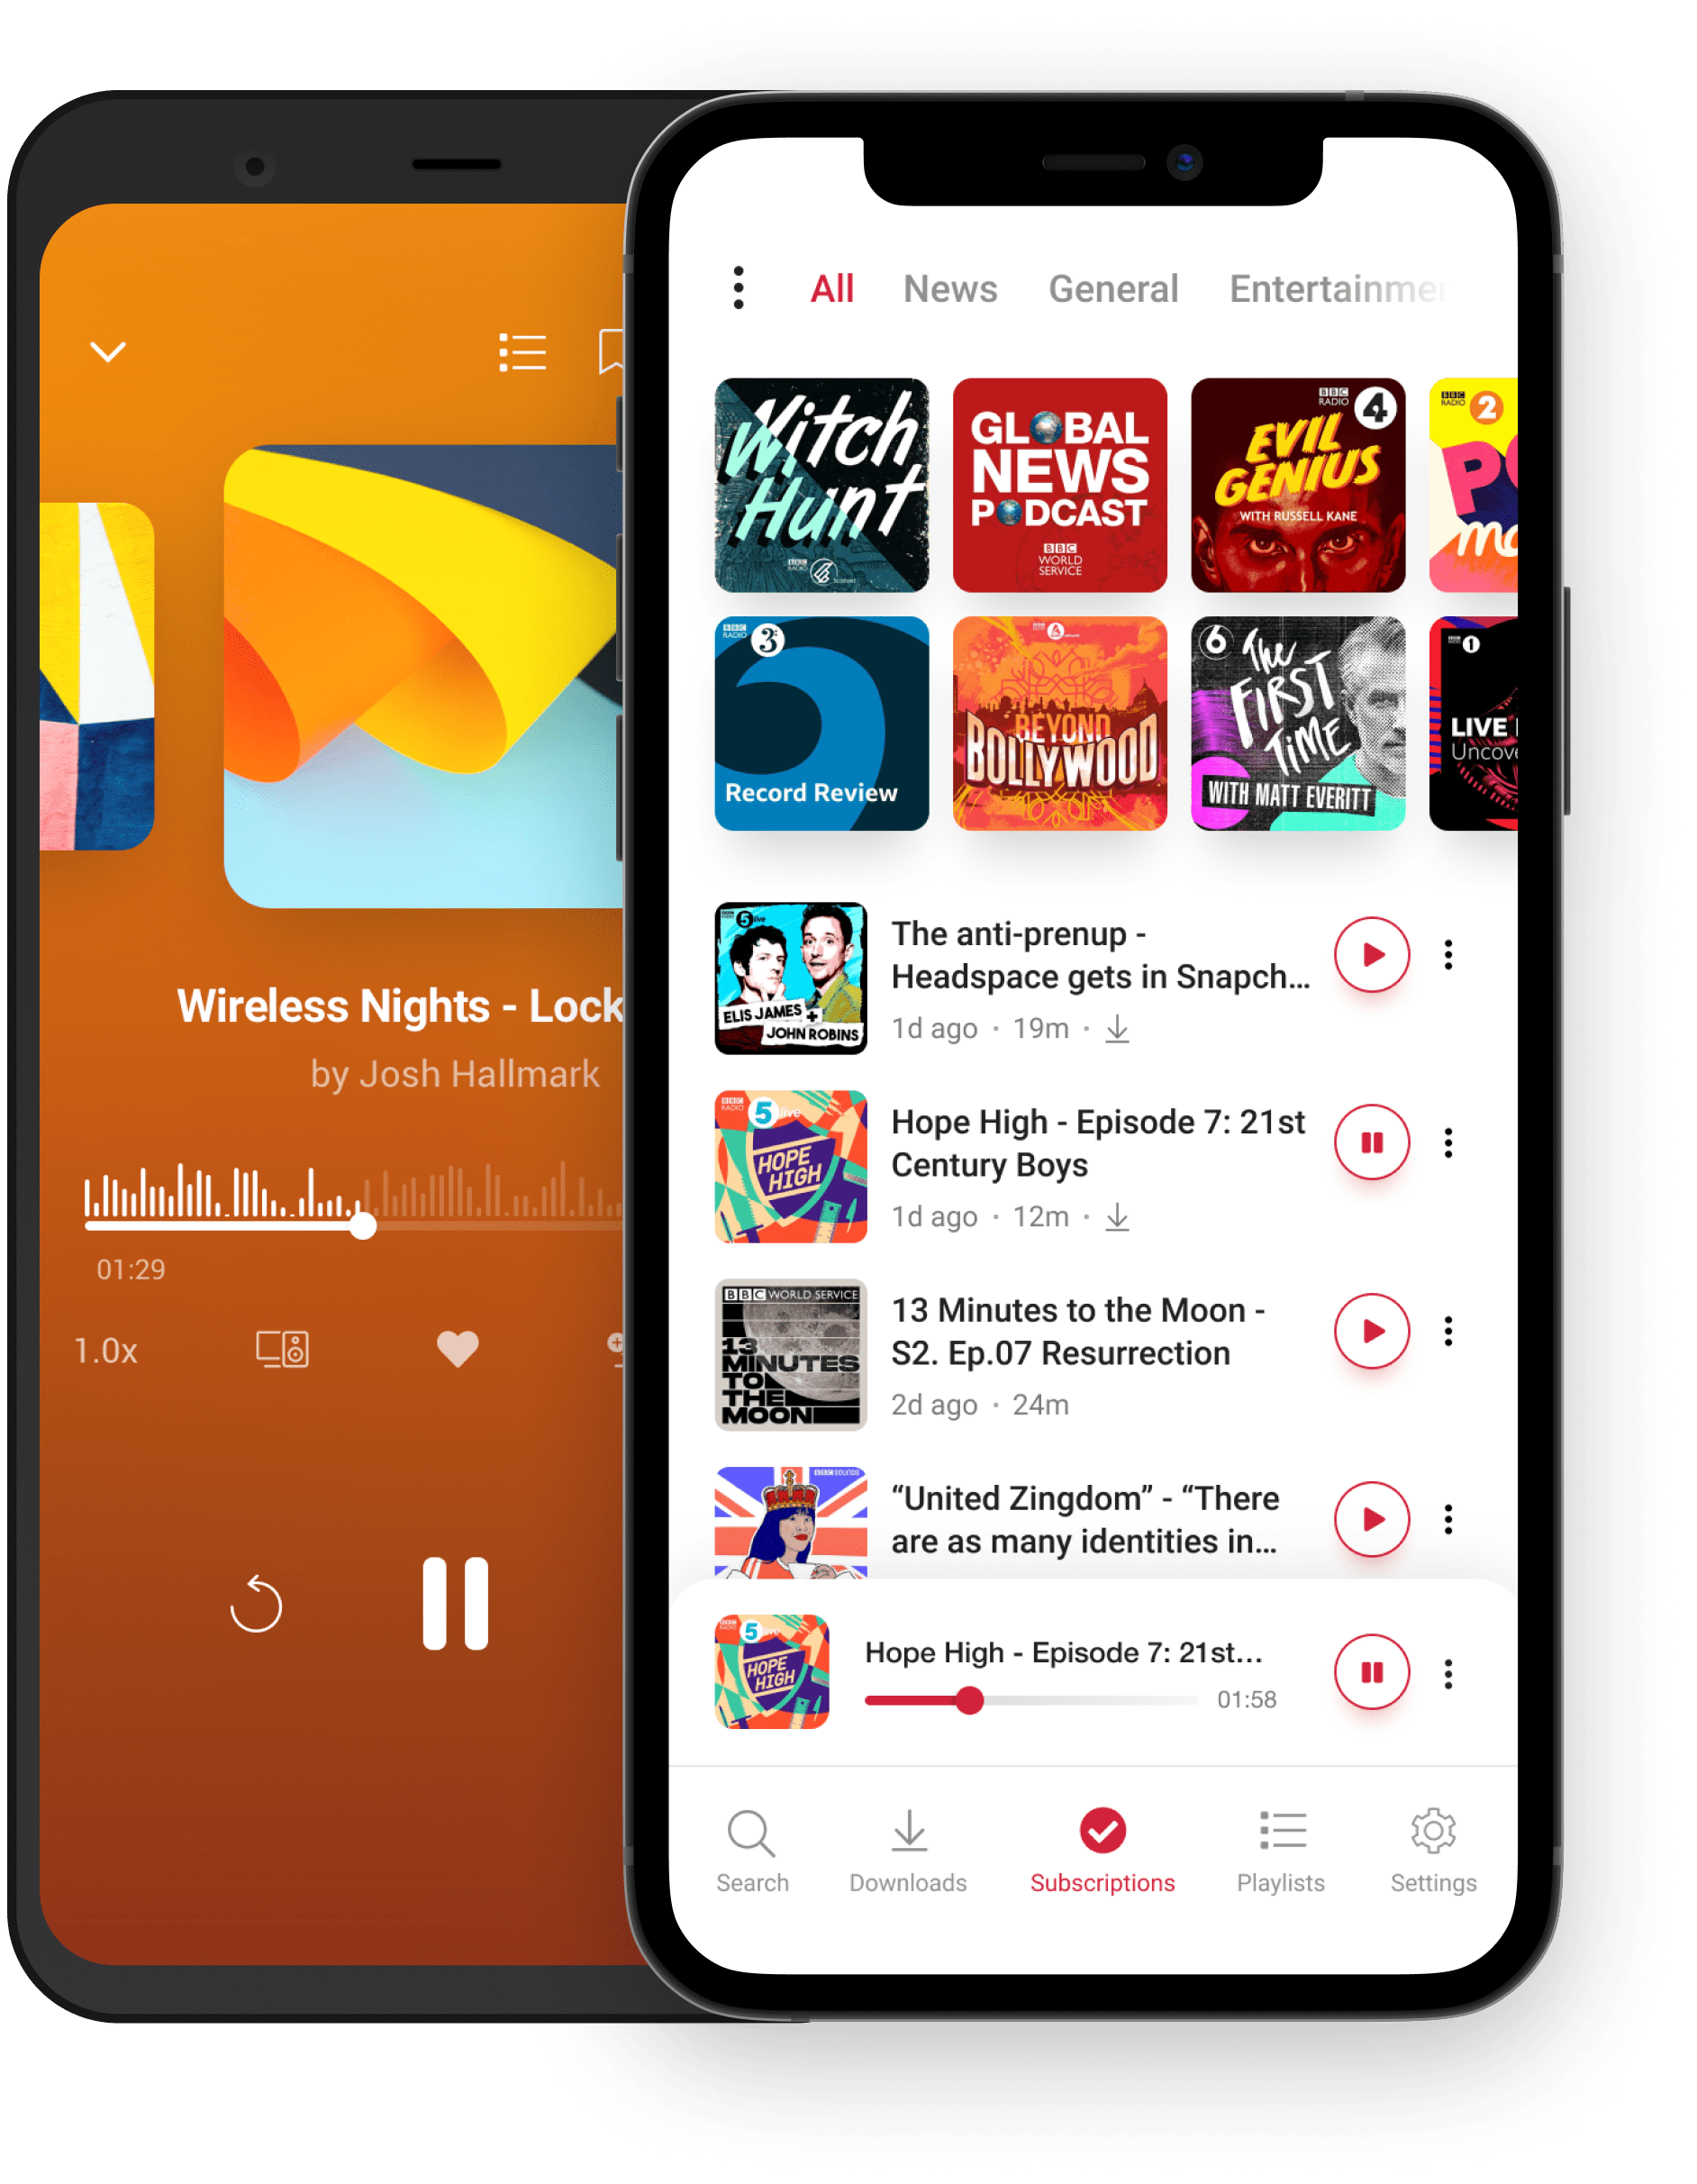 Player FM - Podcast Smarter